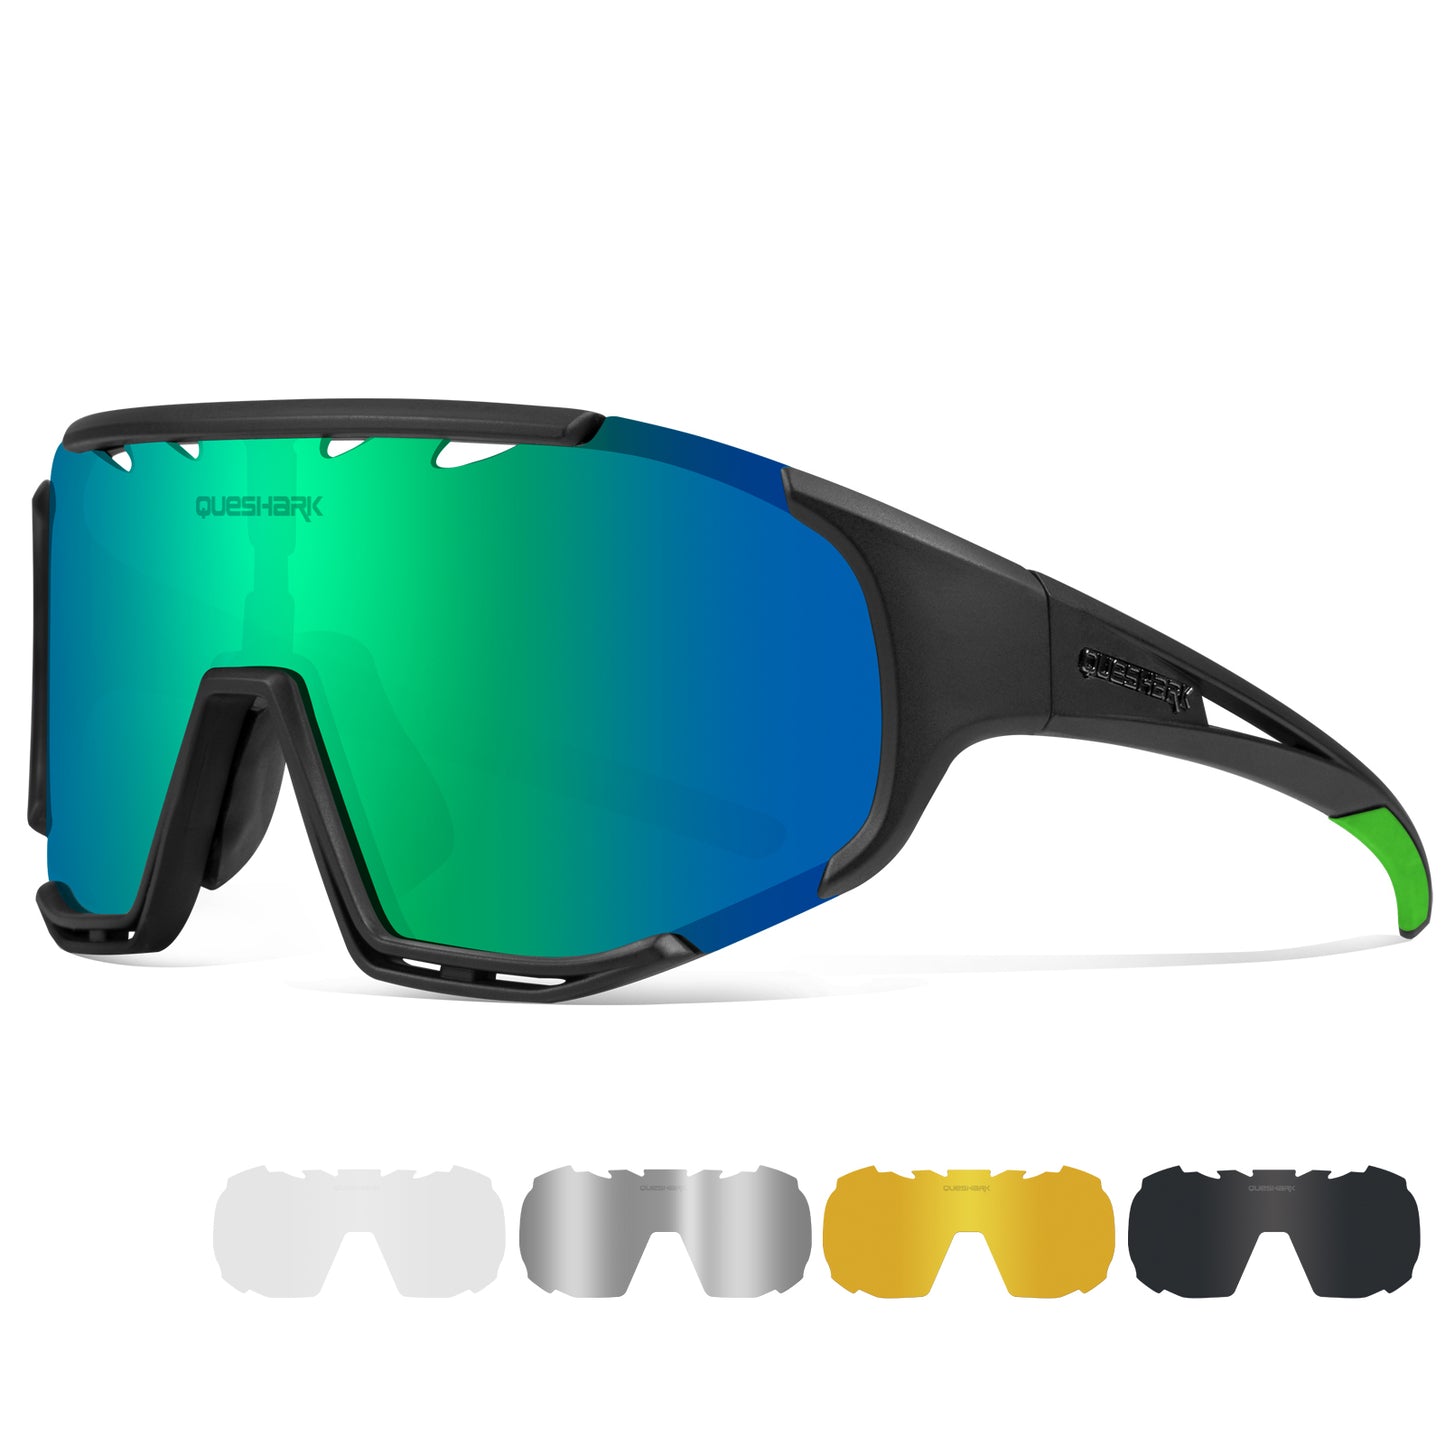 <transcy>QE55 Gafas de sol polarizadas negras y verdes Gafas de ciclismo Hombres Mujeres Gafas de conducción de gran tamaño con 5 lentes</transcy>